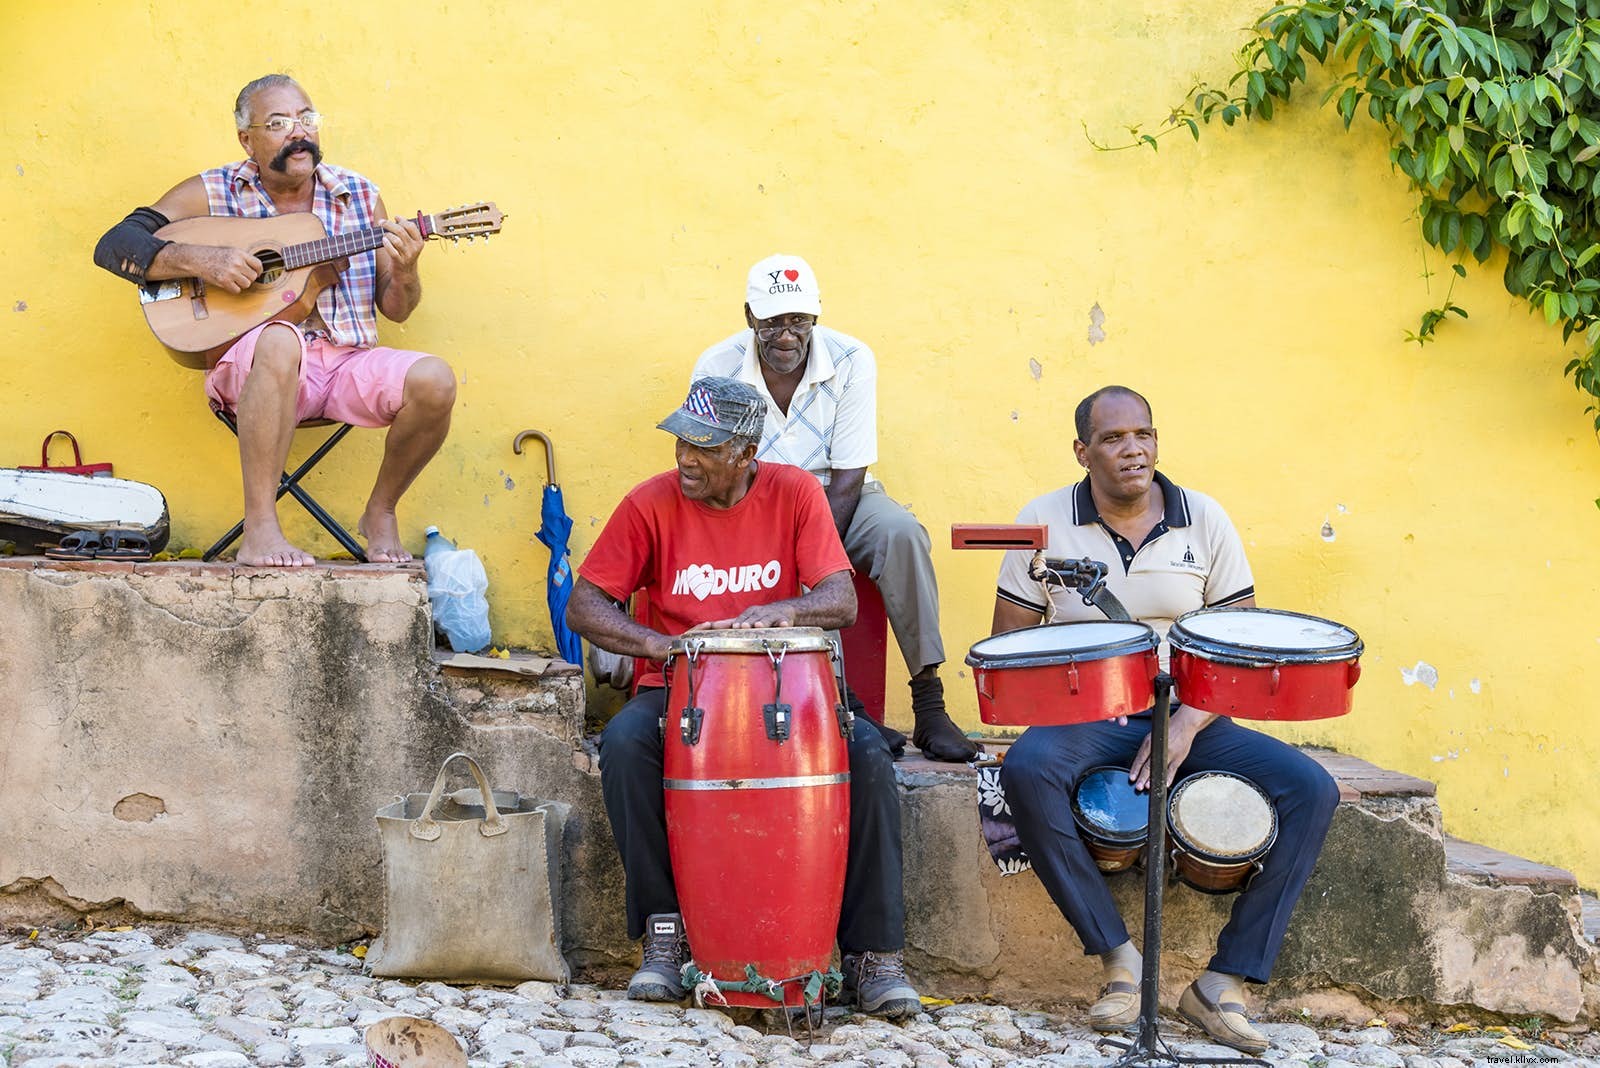 El ritmo cubano :l âme musicale de Cuba 